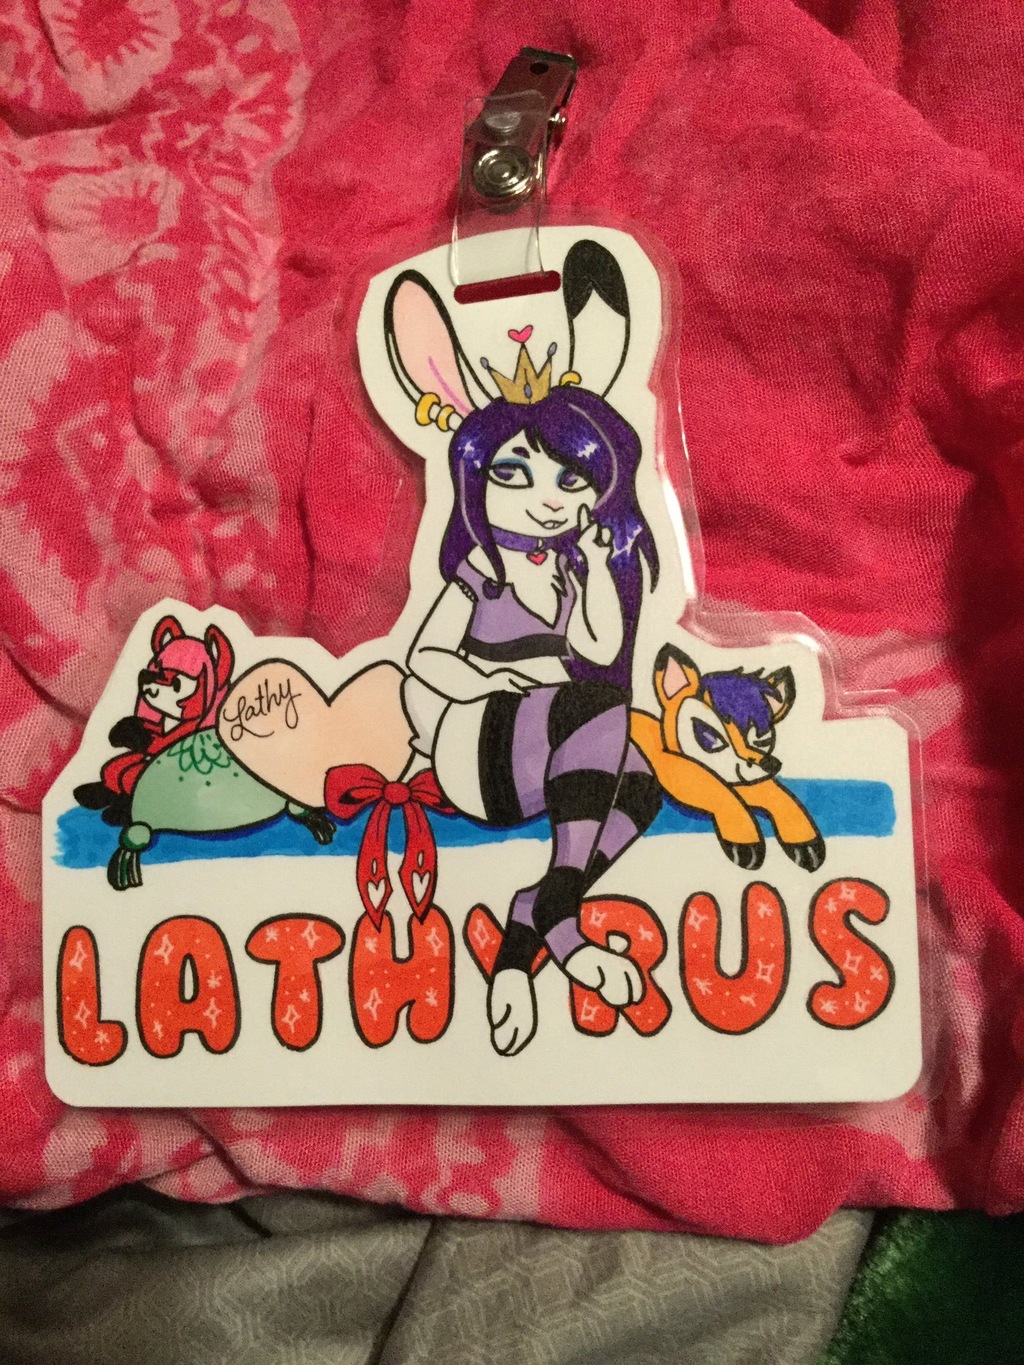 Most recent image: Lathyrus Bunny Badge